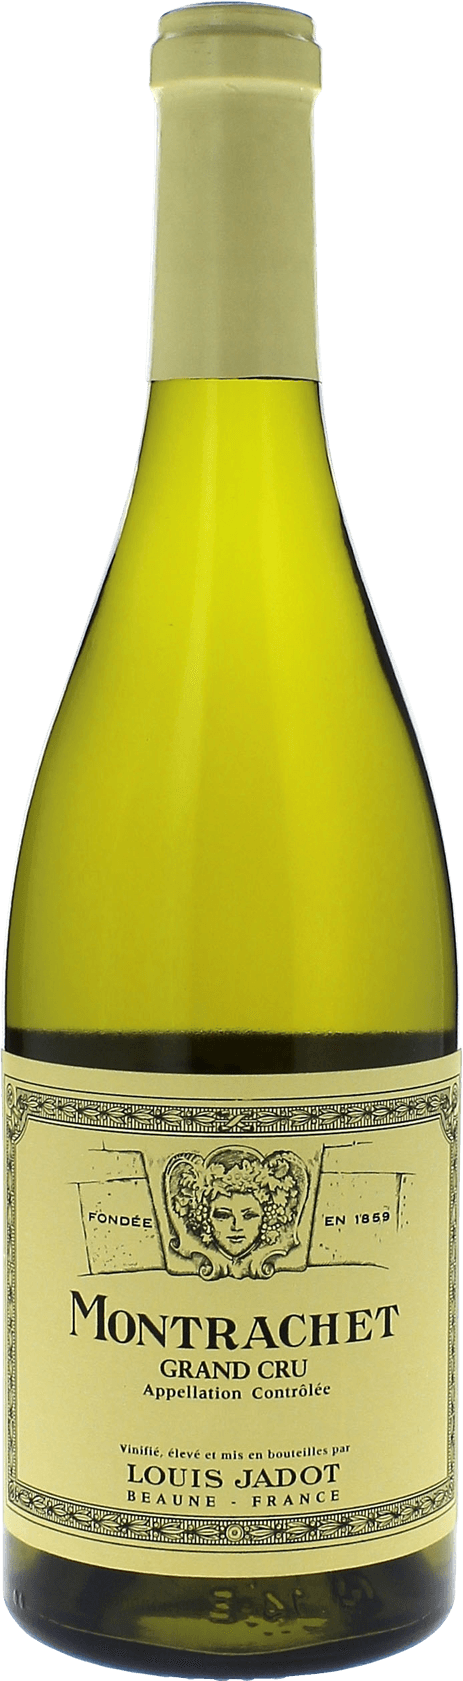 Montrachet grand cru 2015  Jadot Louis, Bourgogne blanc